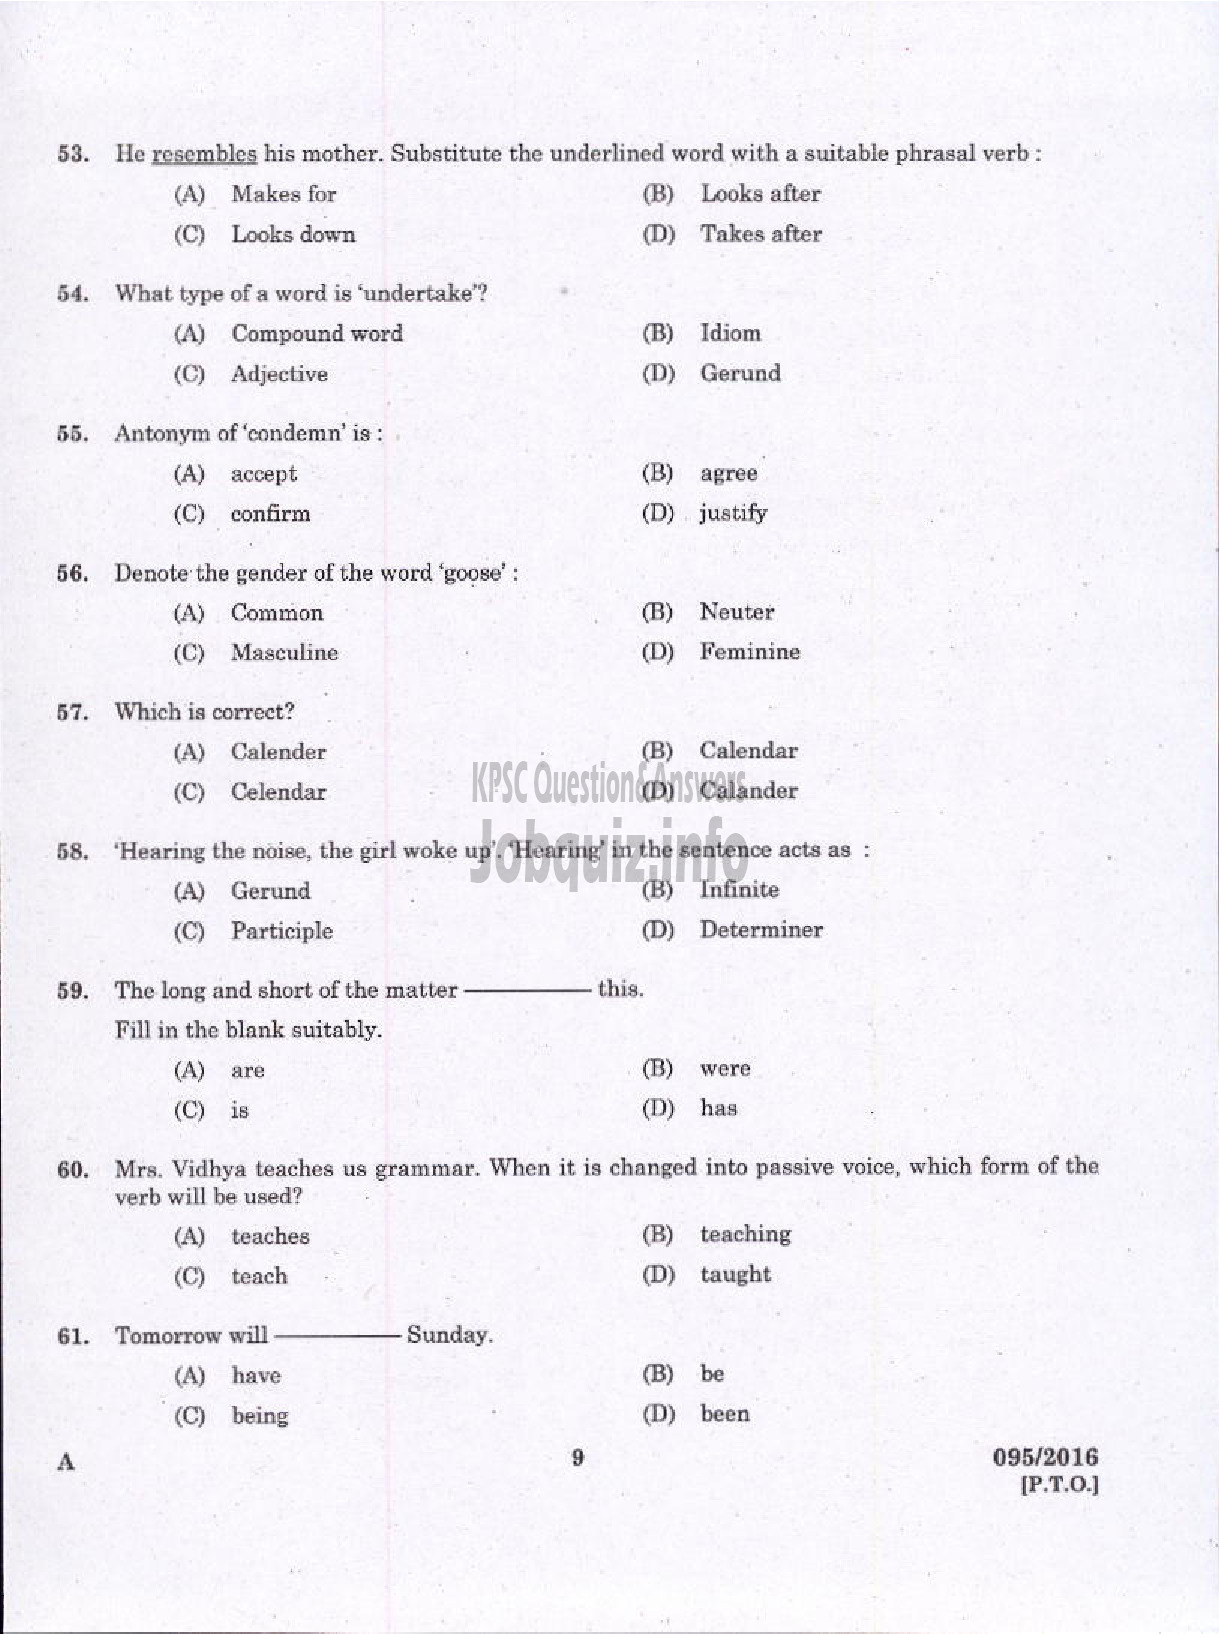 Kerala PSC Question Paper - TELEPHONE OPERATOR DCB-7